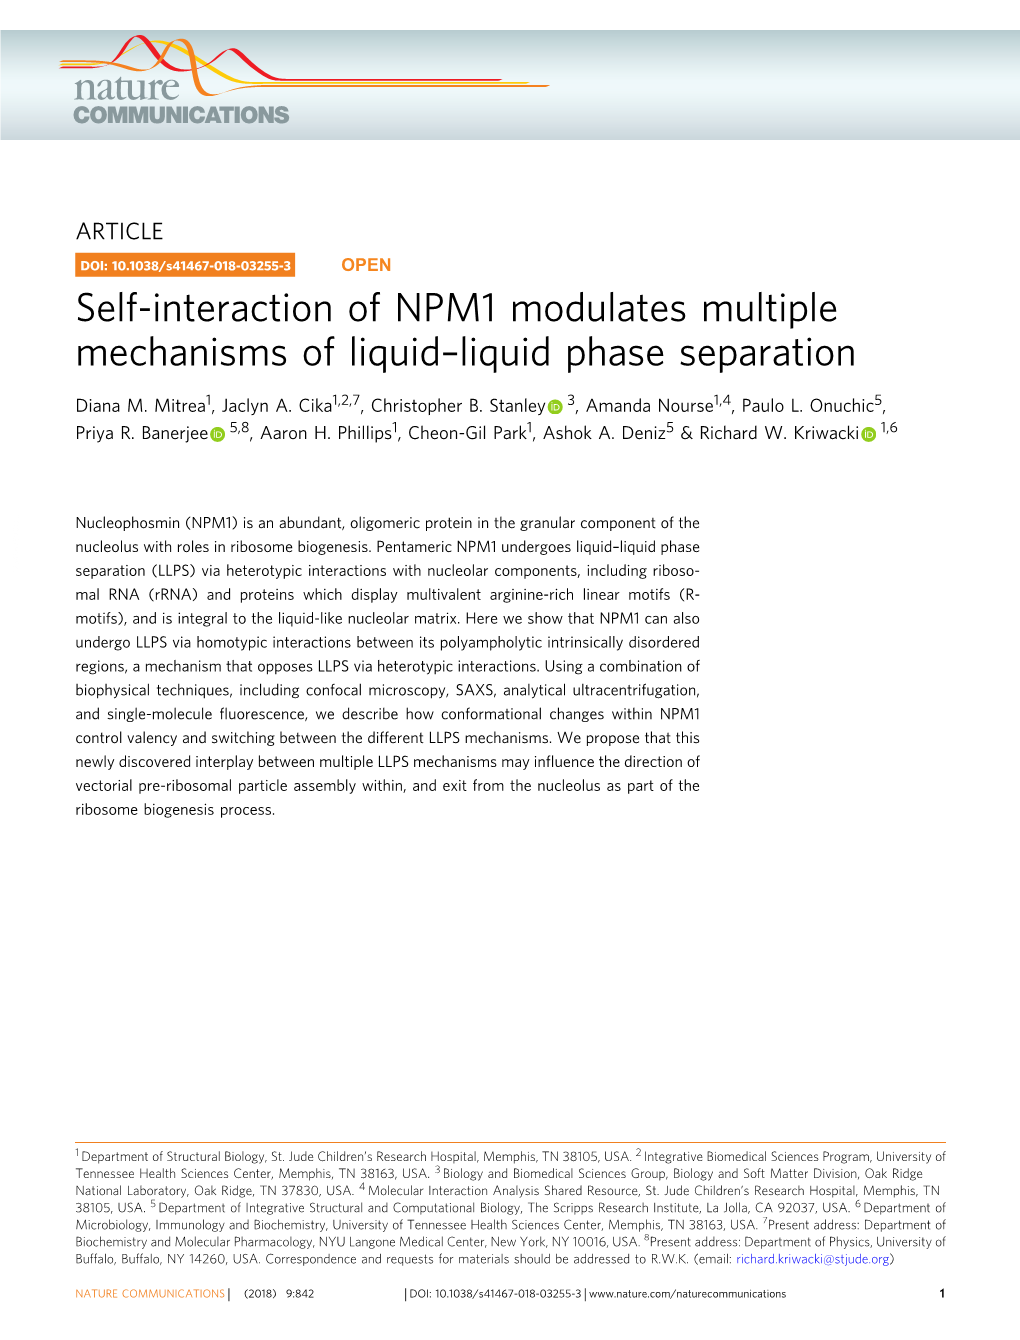 Self-Interaction of NPM1 Modulates Multiple Mechanisms of Liquidв